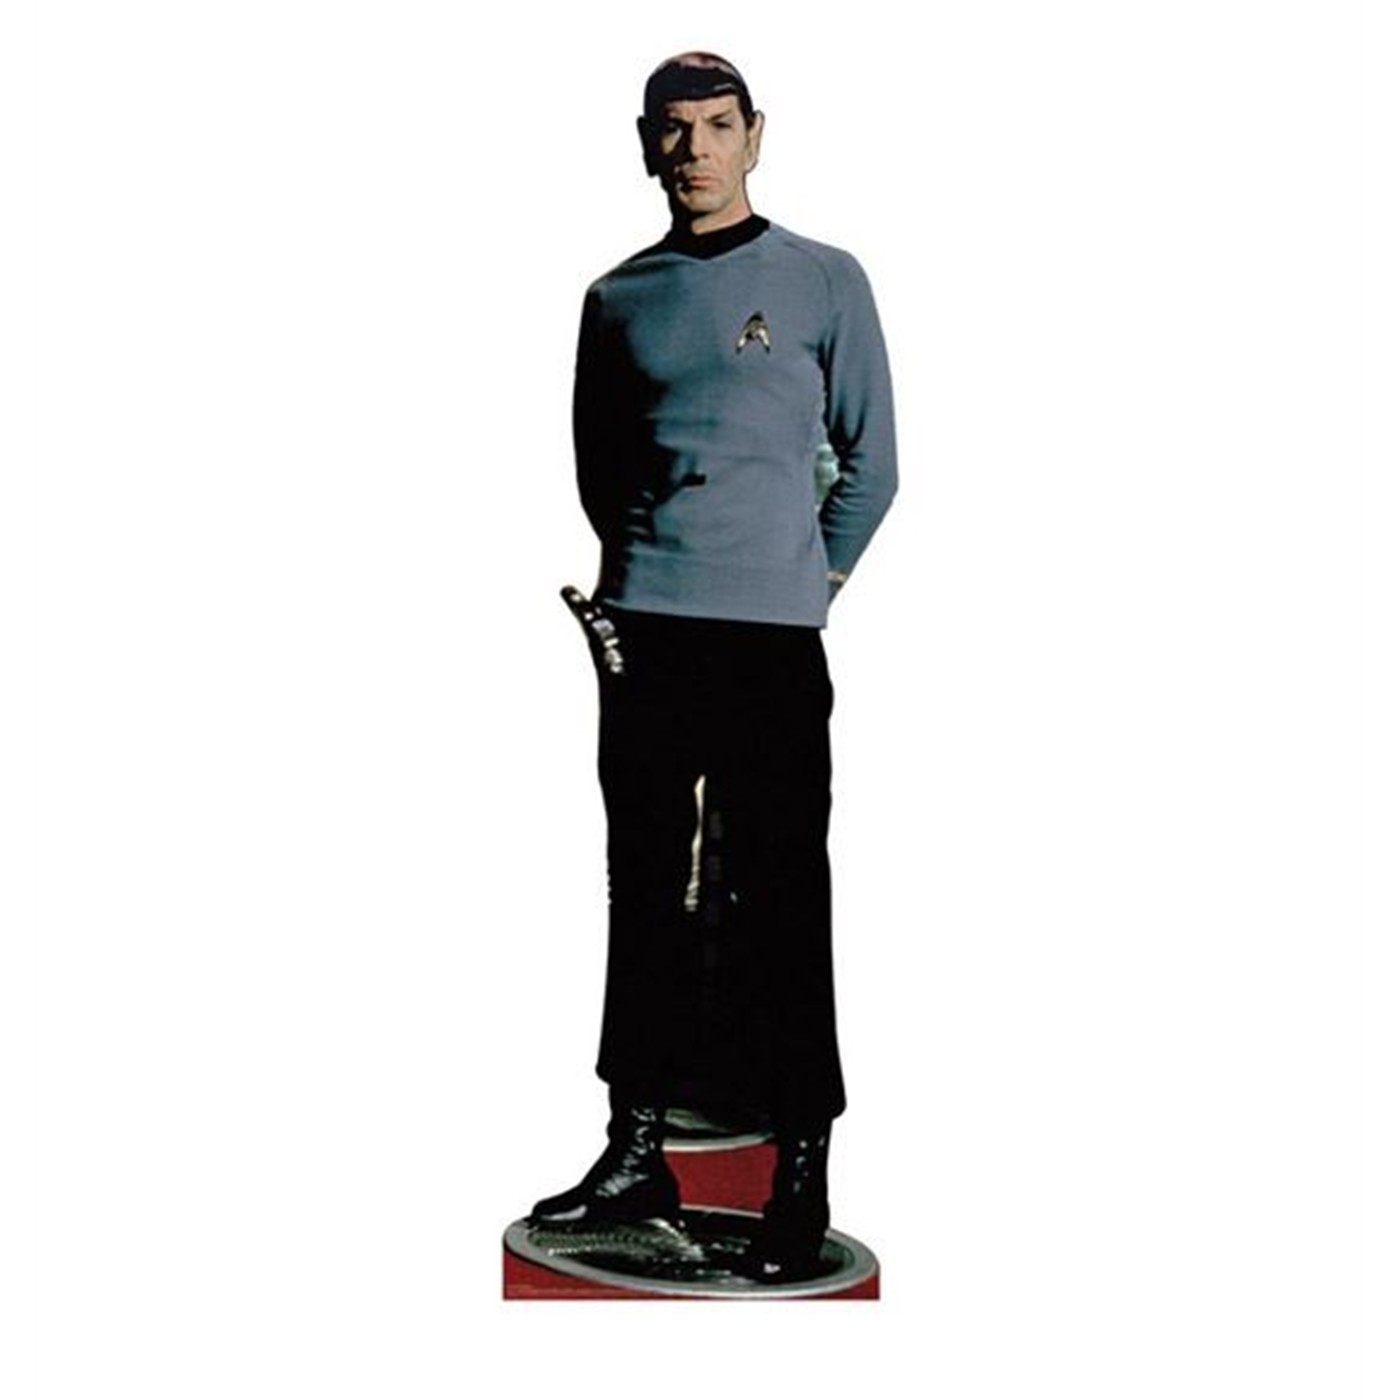 Star Trek: The Original Series Spock Cardboard Cutout Standee